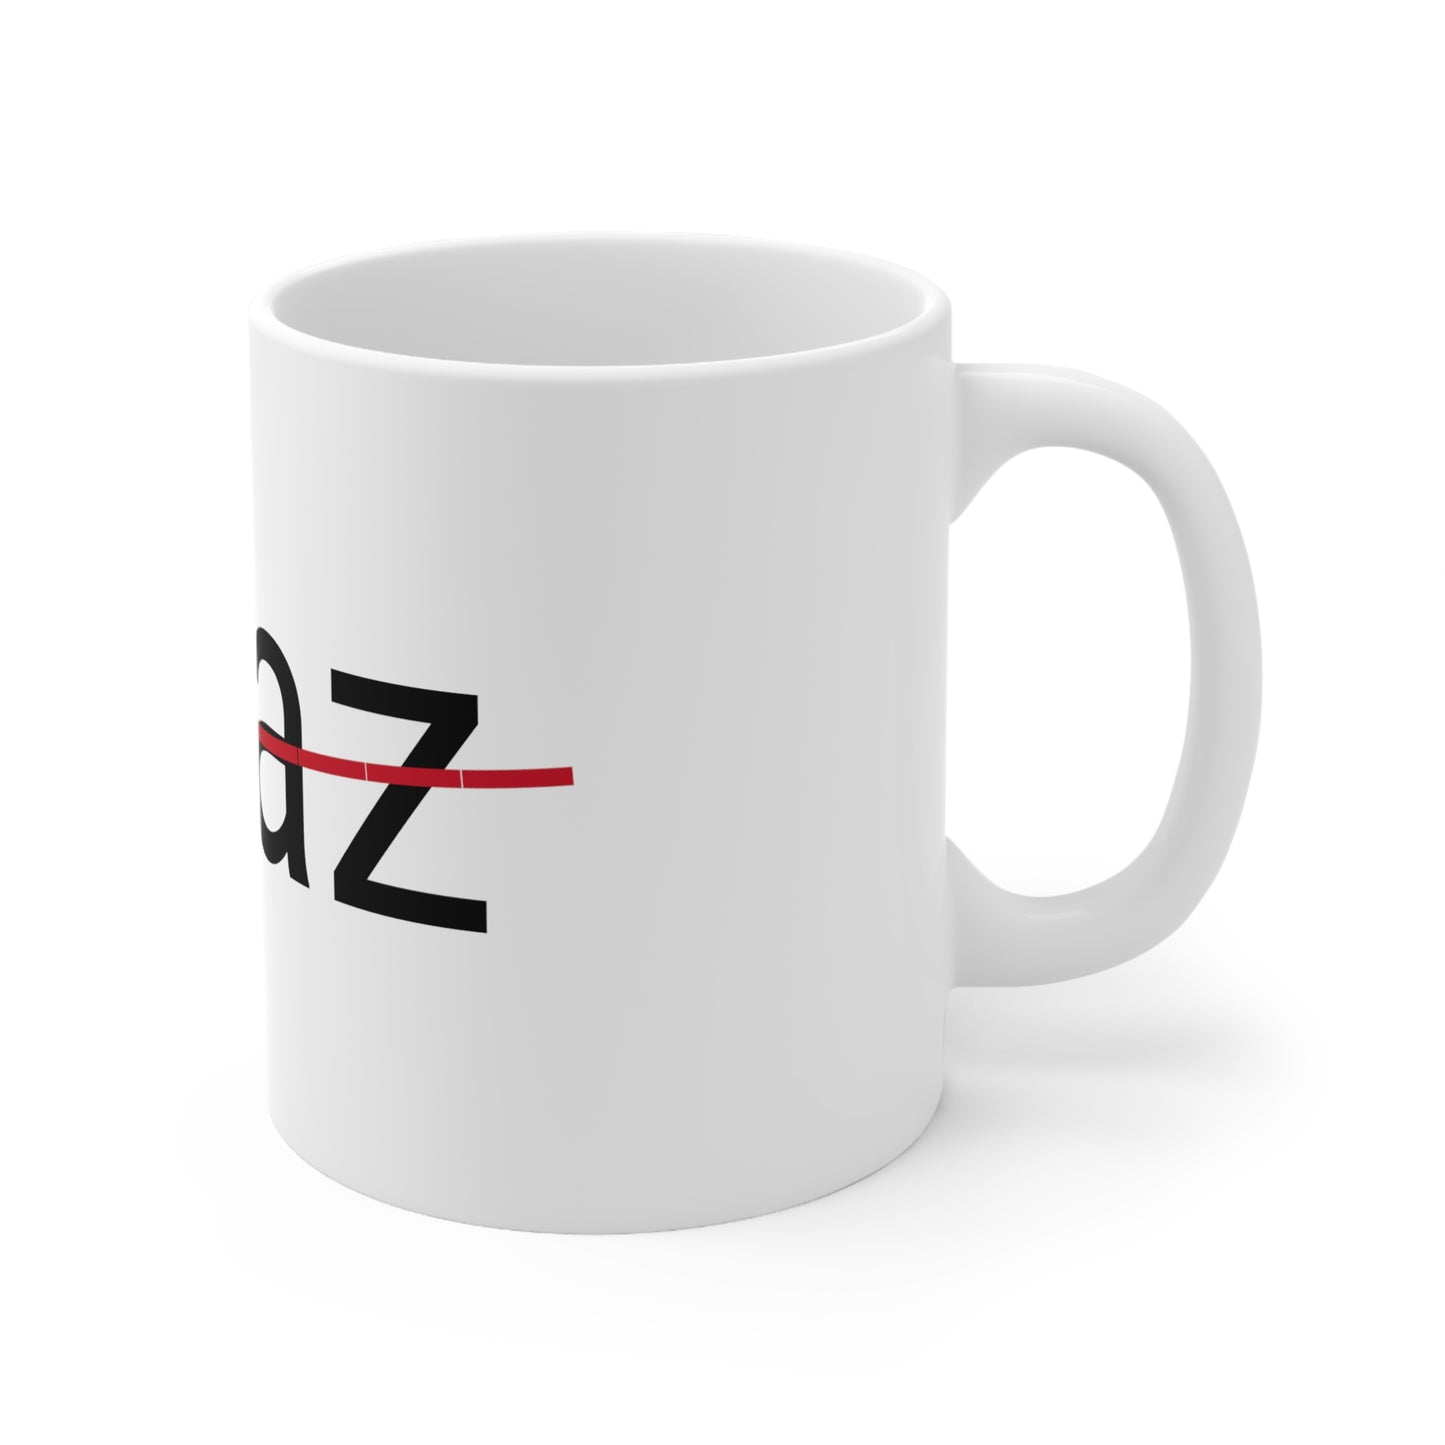 Boaz not my name coffee Mug 11oz